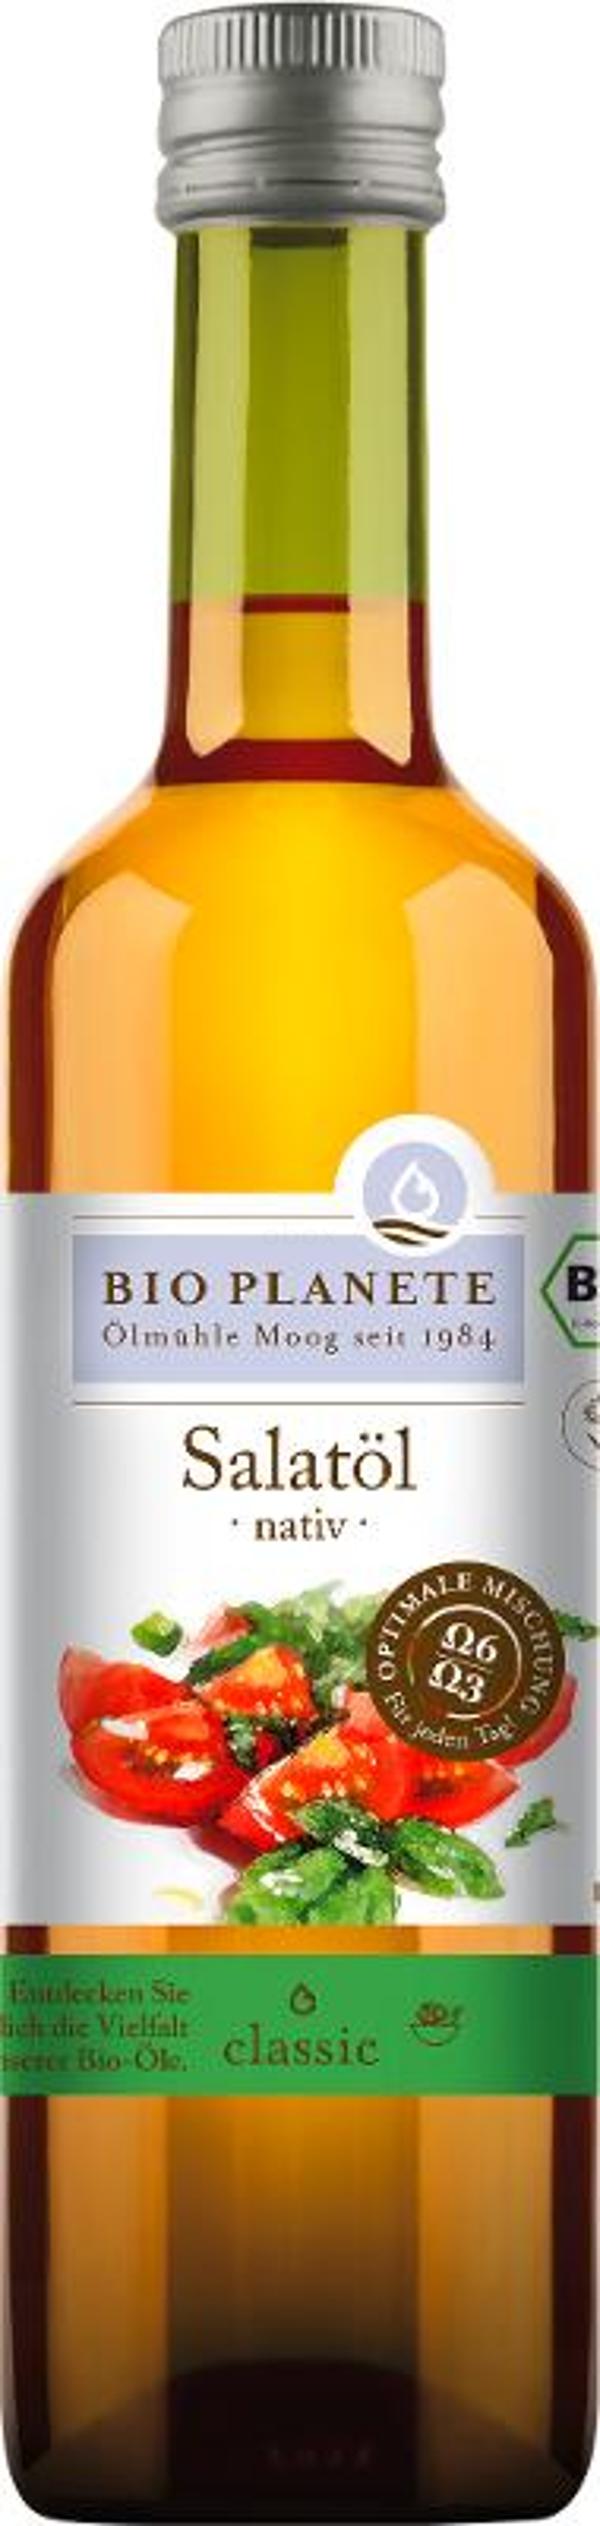 Produktfoto zu Salatöl nativ 0,5l